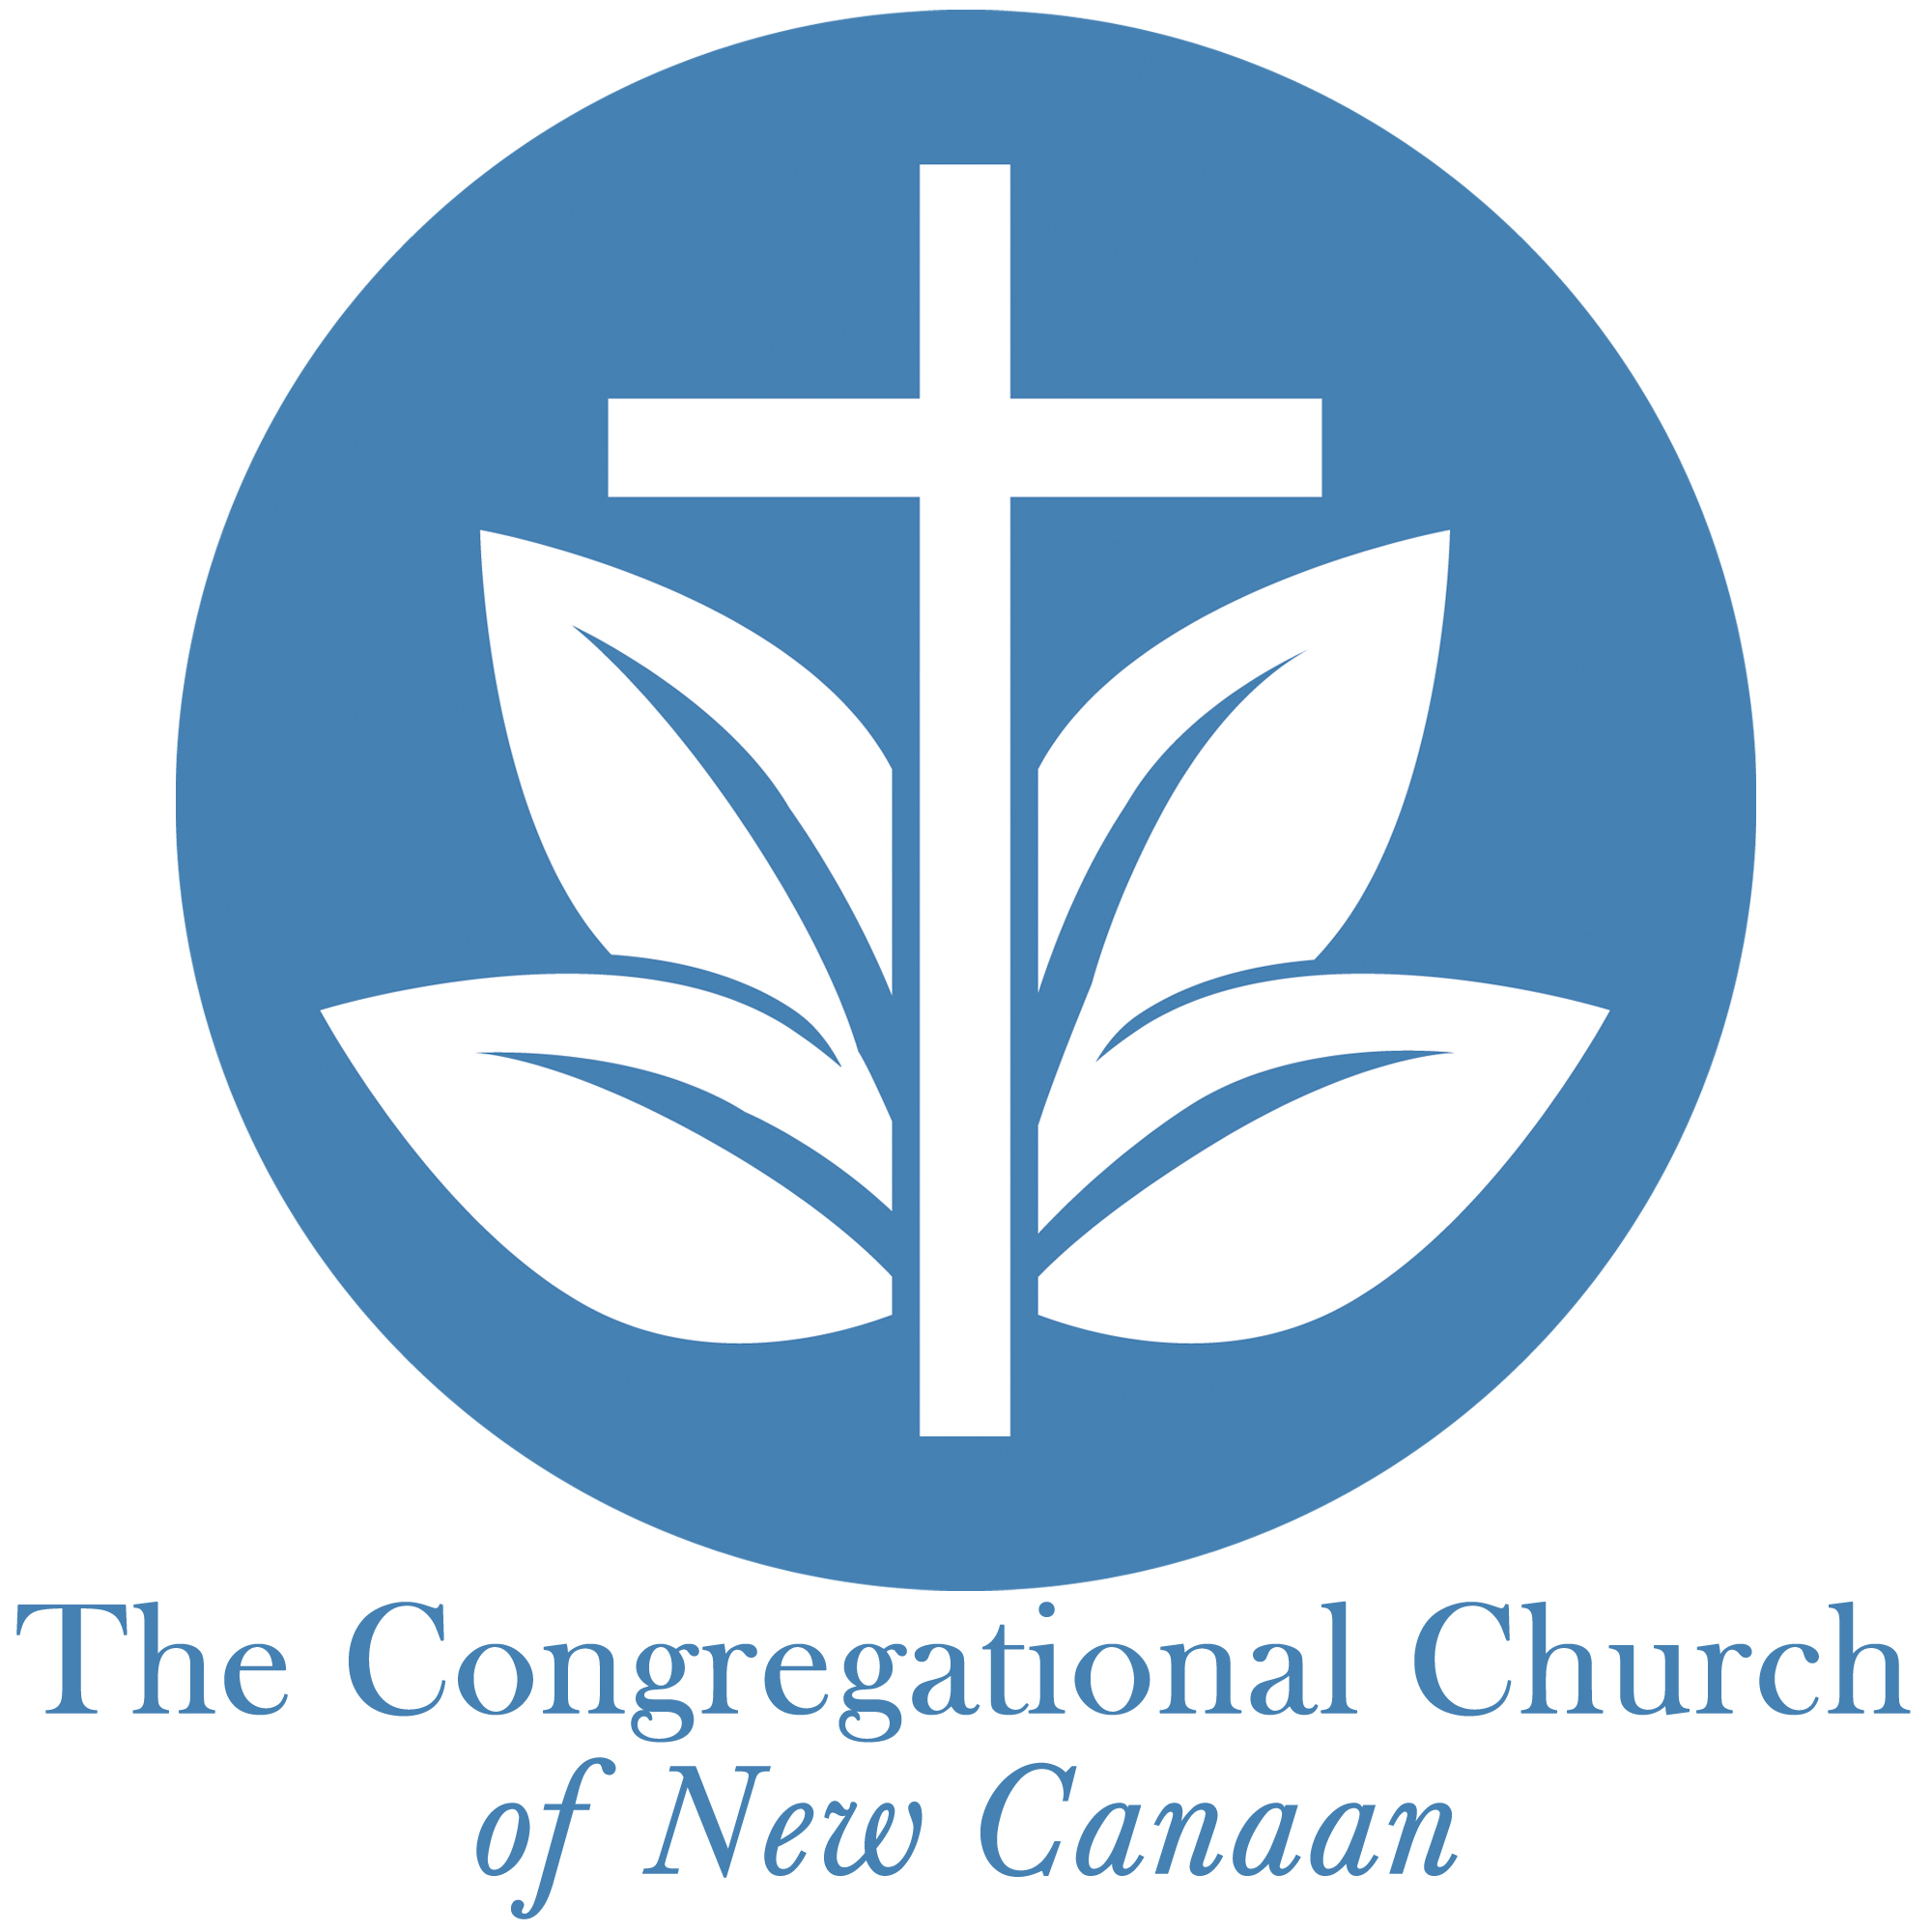 ”Healing Division” June 26, 2016 The Rev. Dr. Stephen Chapin Garner